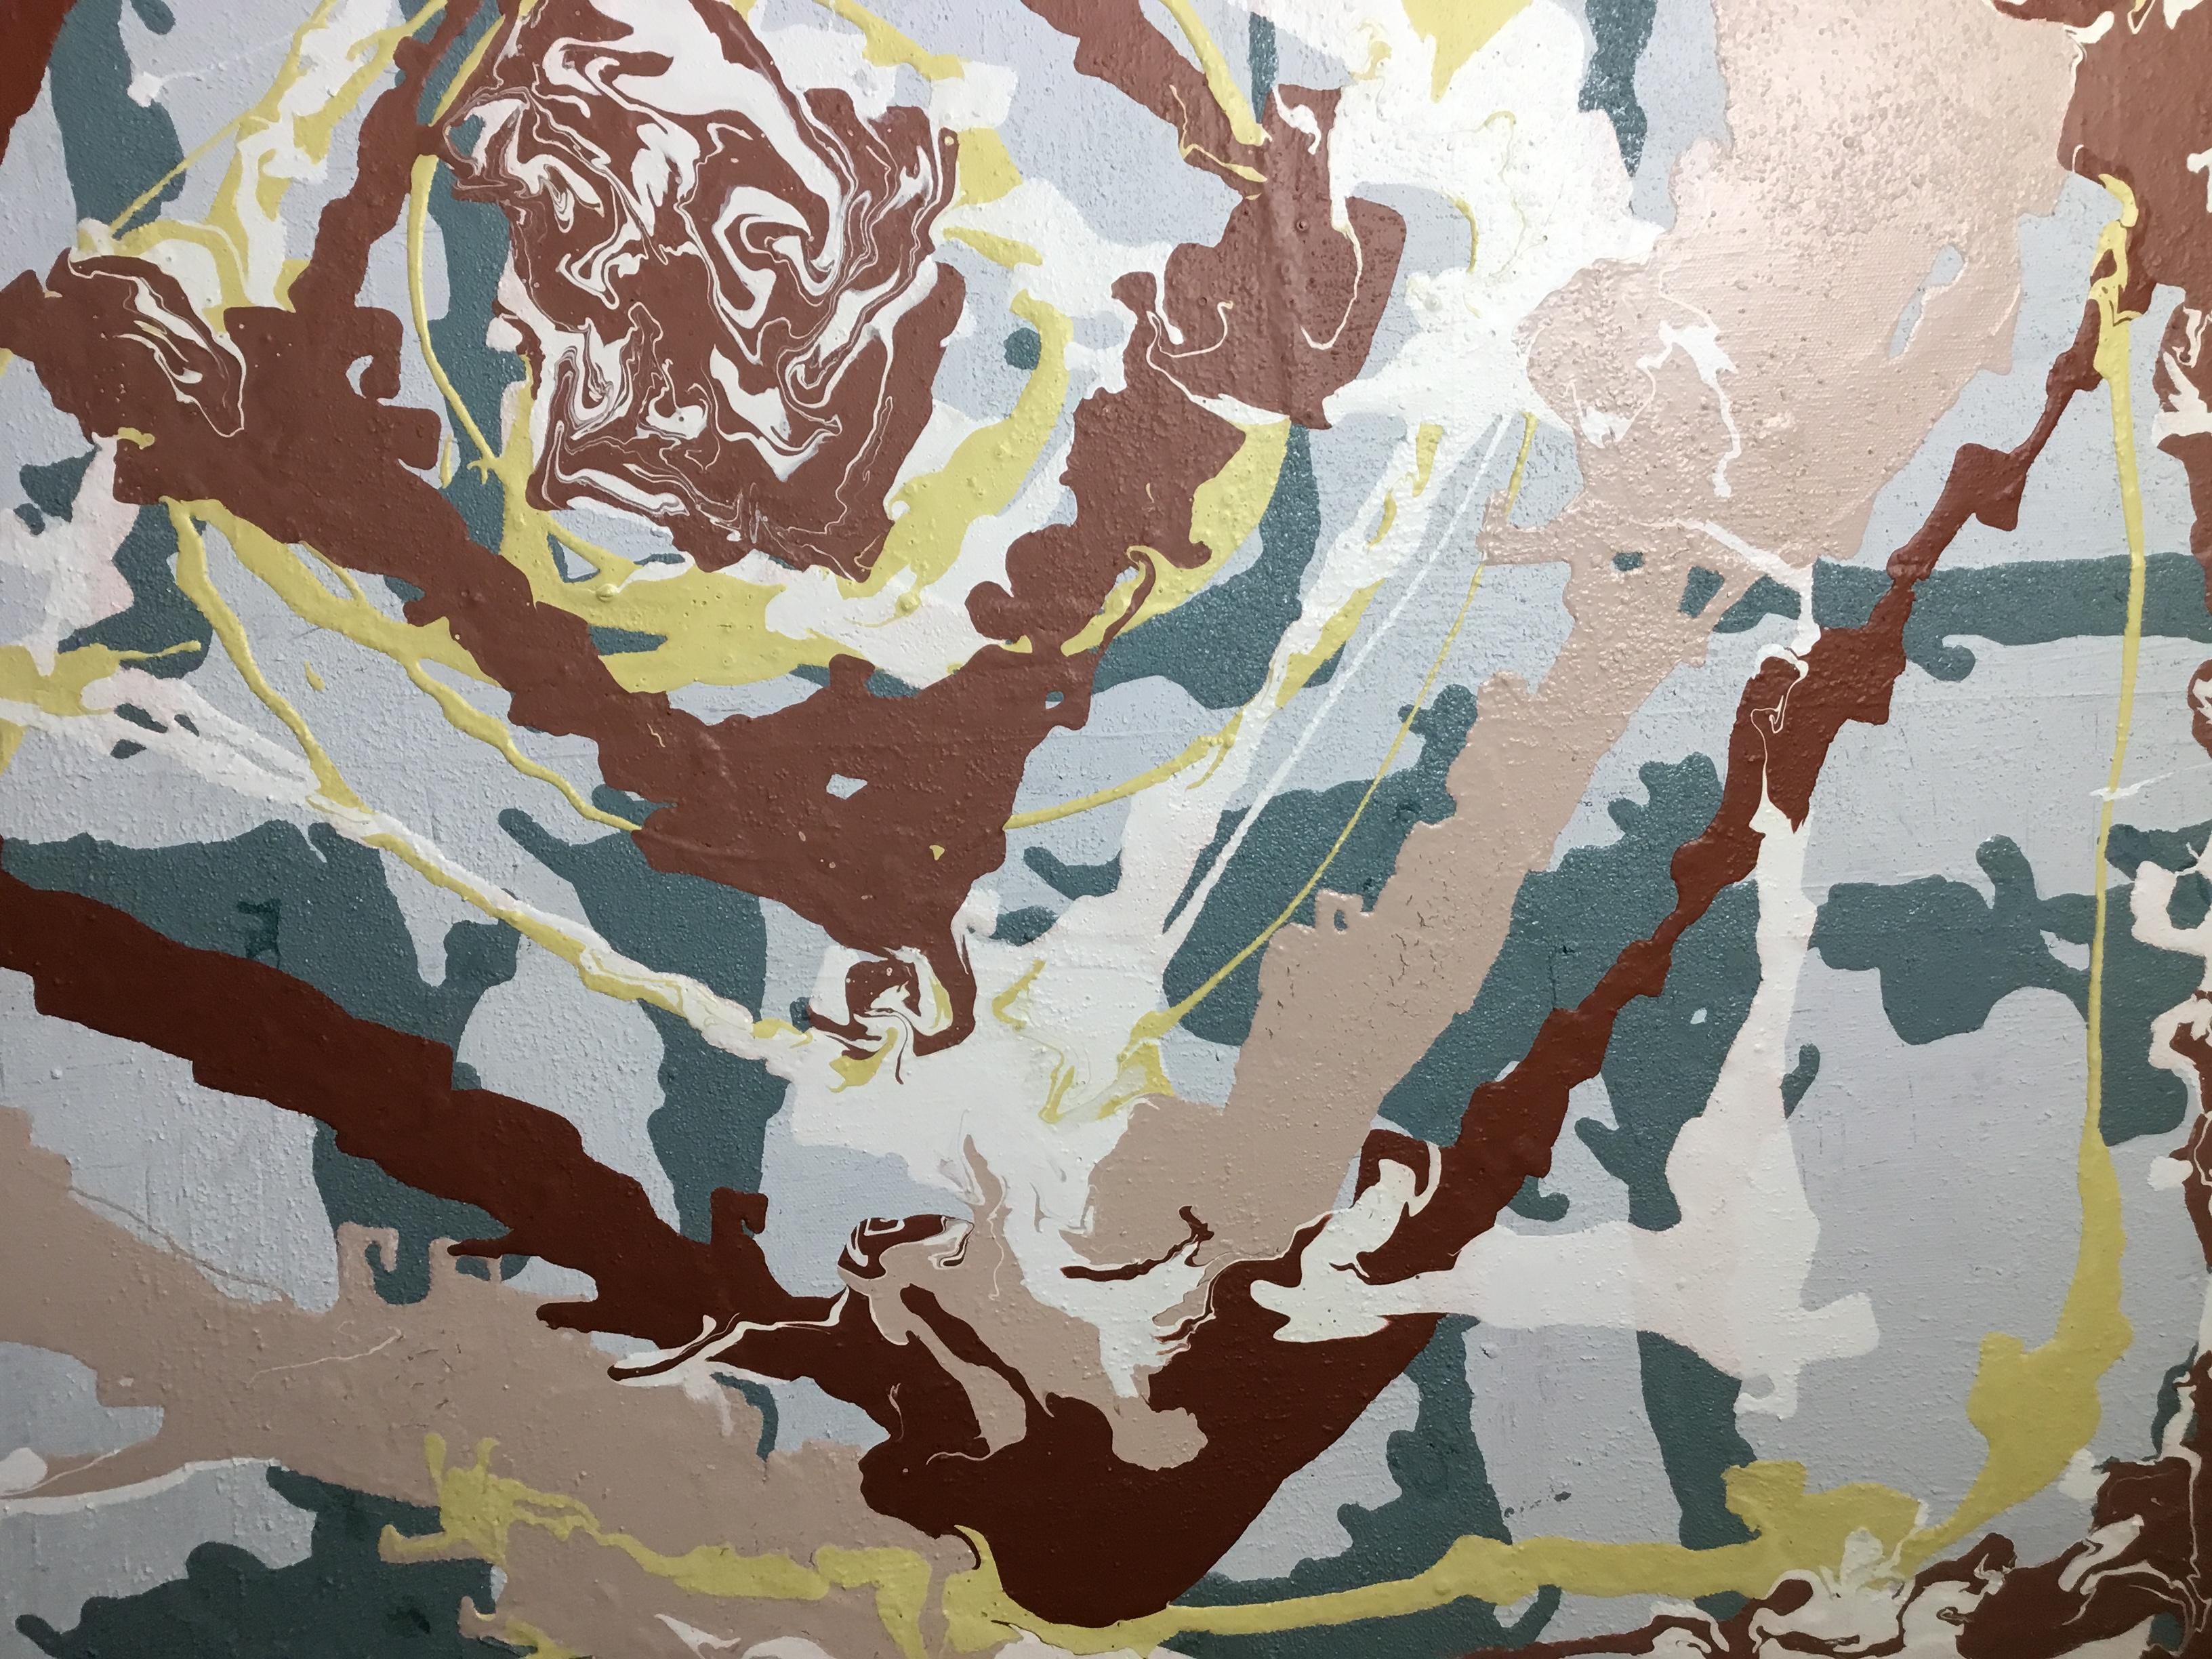 Joseph Malekan ‘Delray Beach’ Abstract Mixed-Media Painting For Sale 7